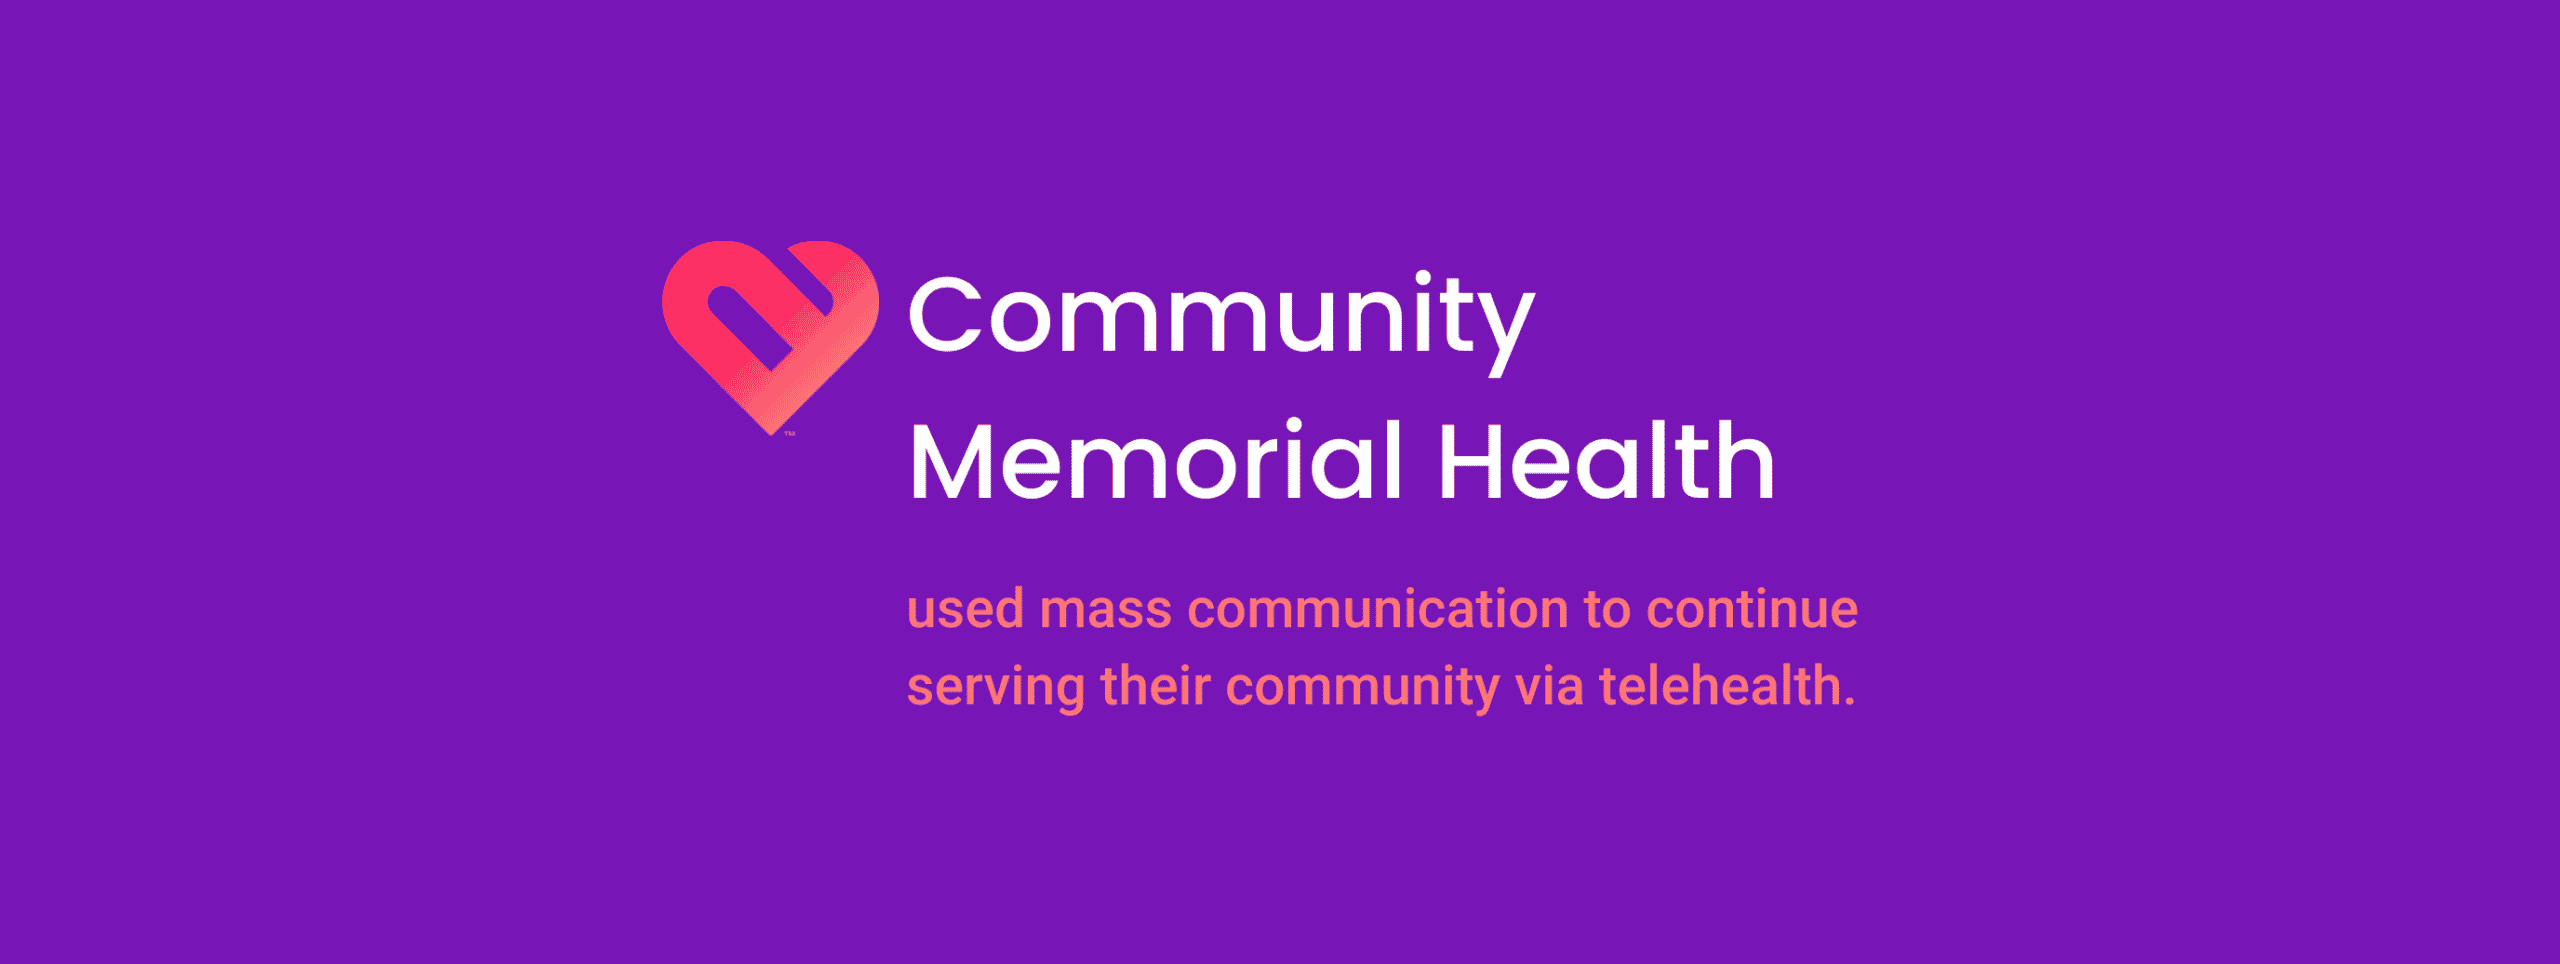 Community Memorial Health COVID header